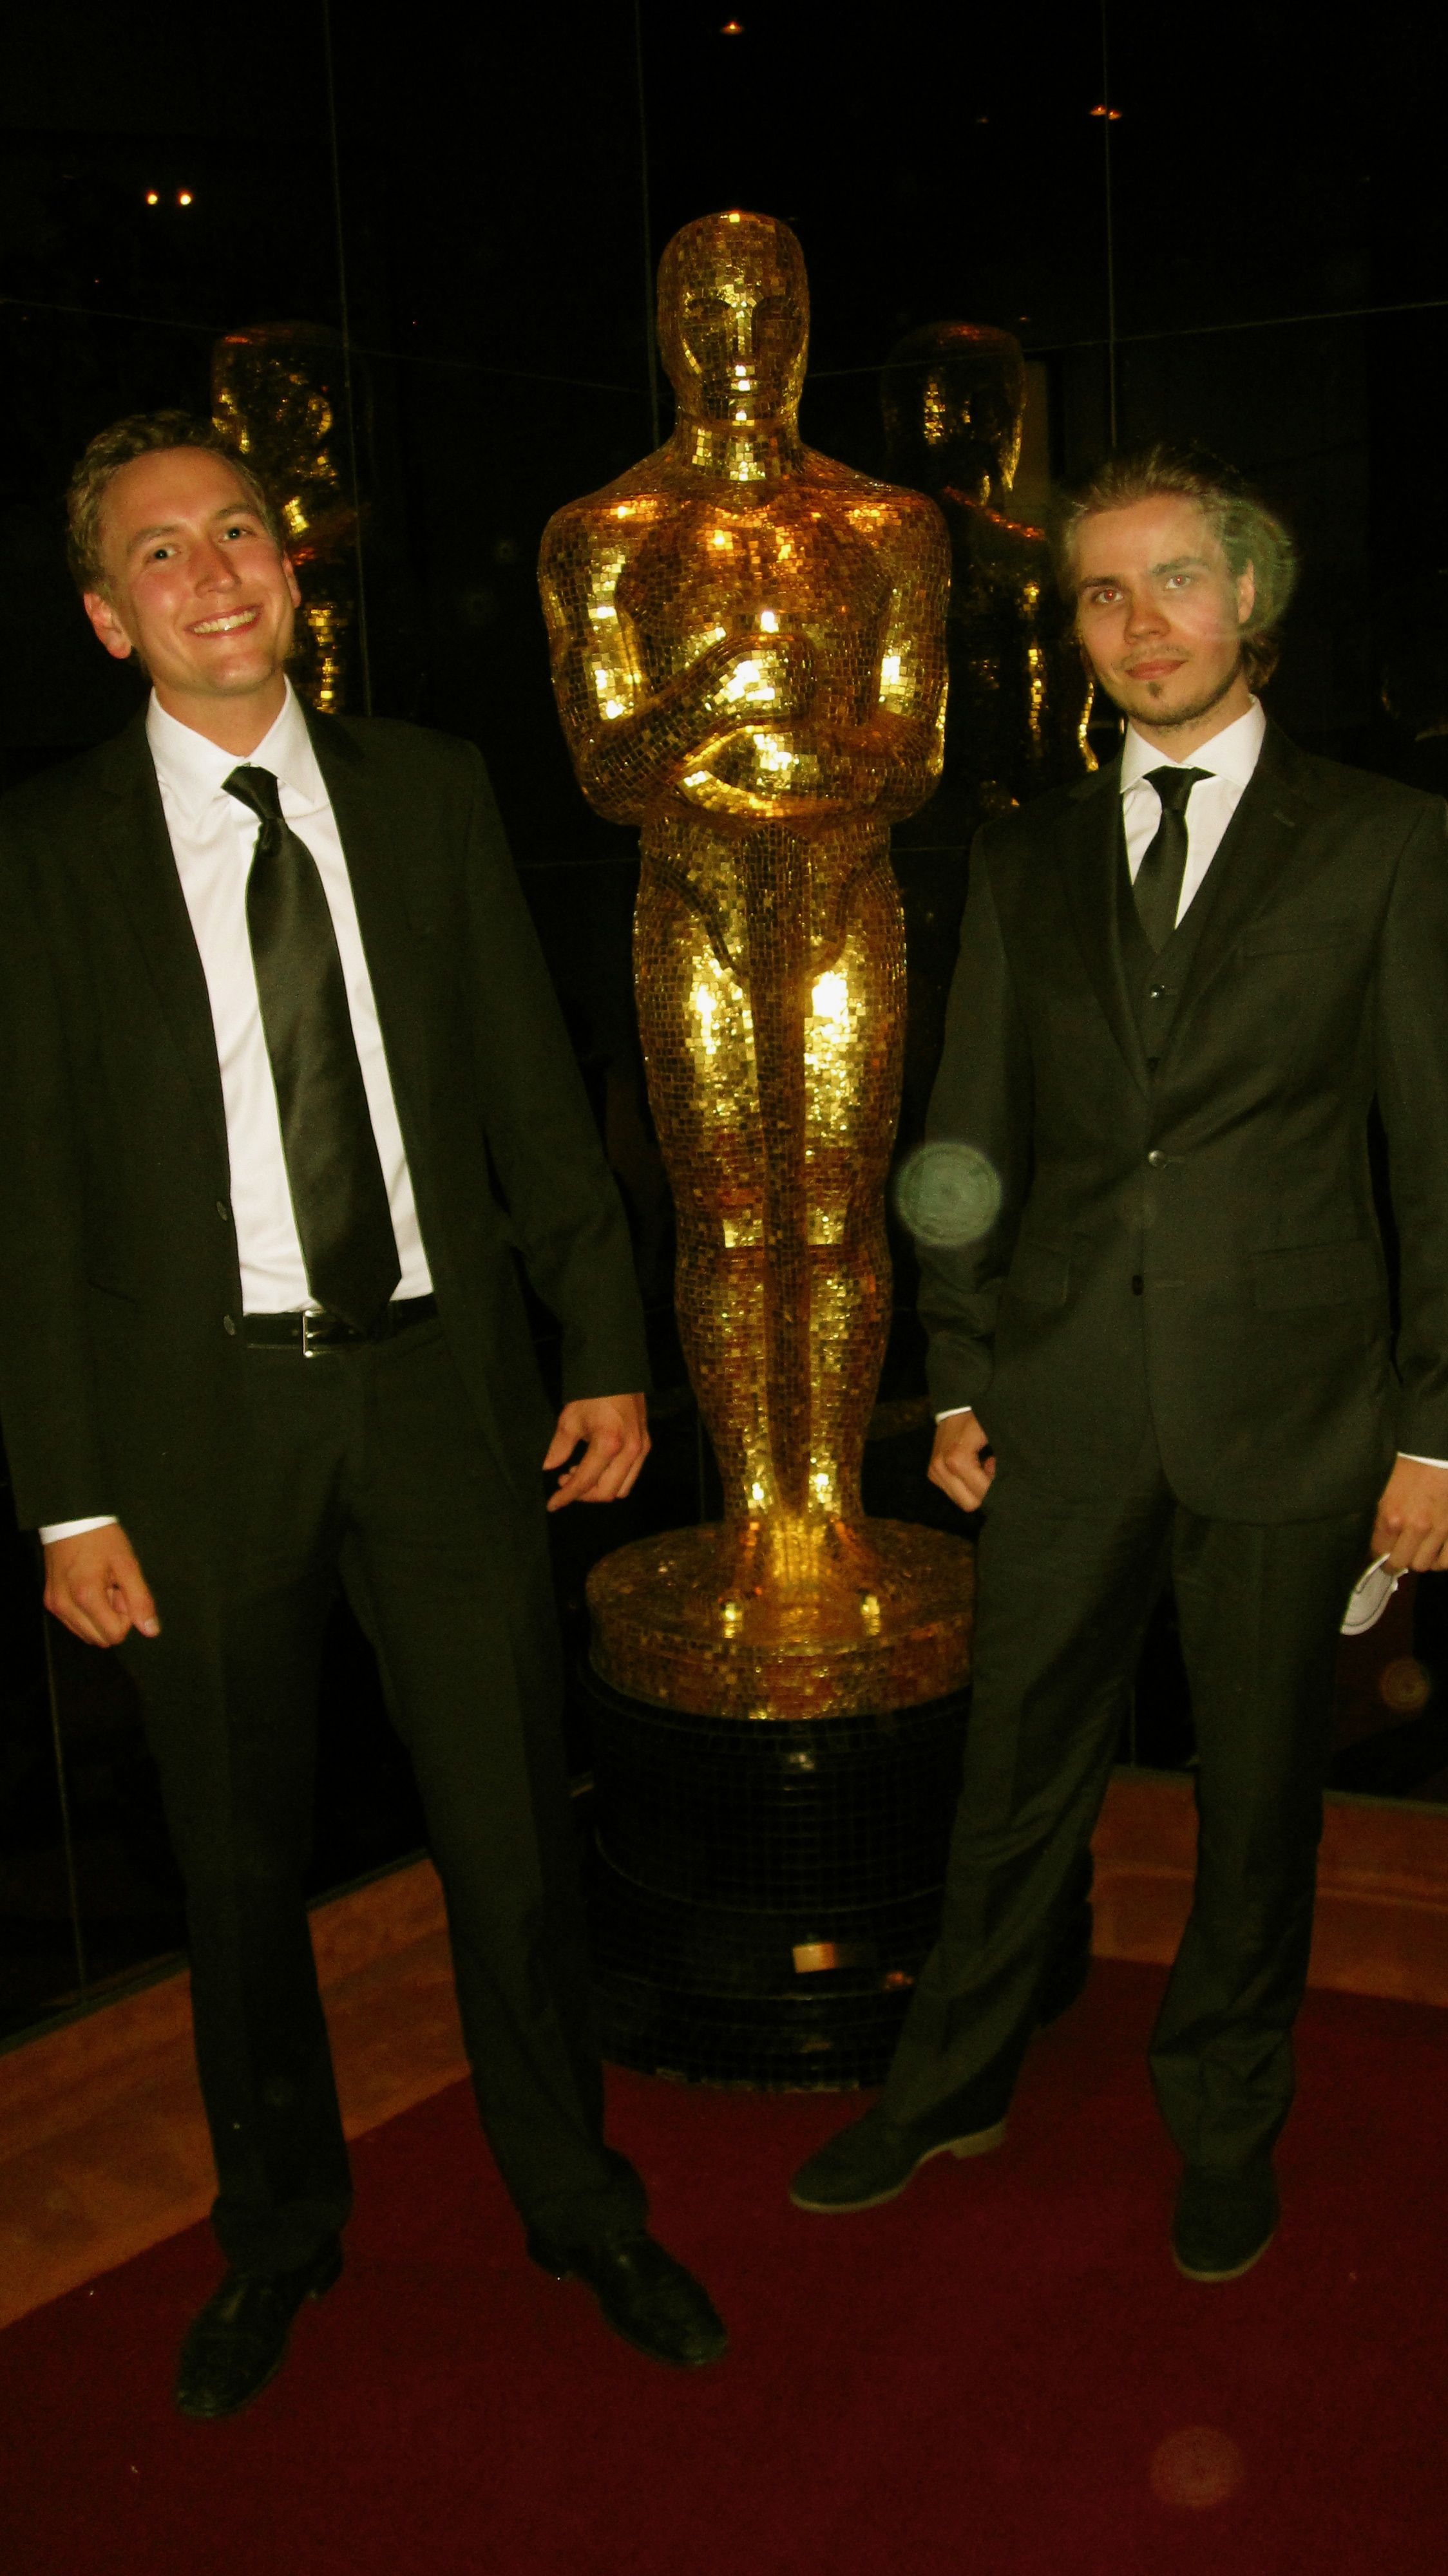 Student Academy Awards 2011 - Foreign winner Bekas producer Glenn Lund and composer Juhana Lehtiniemi.